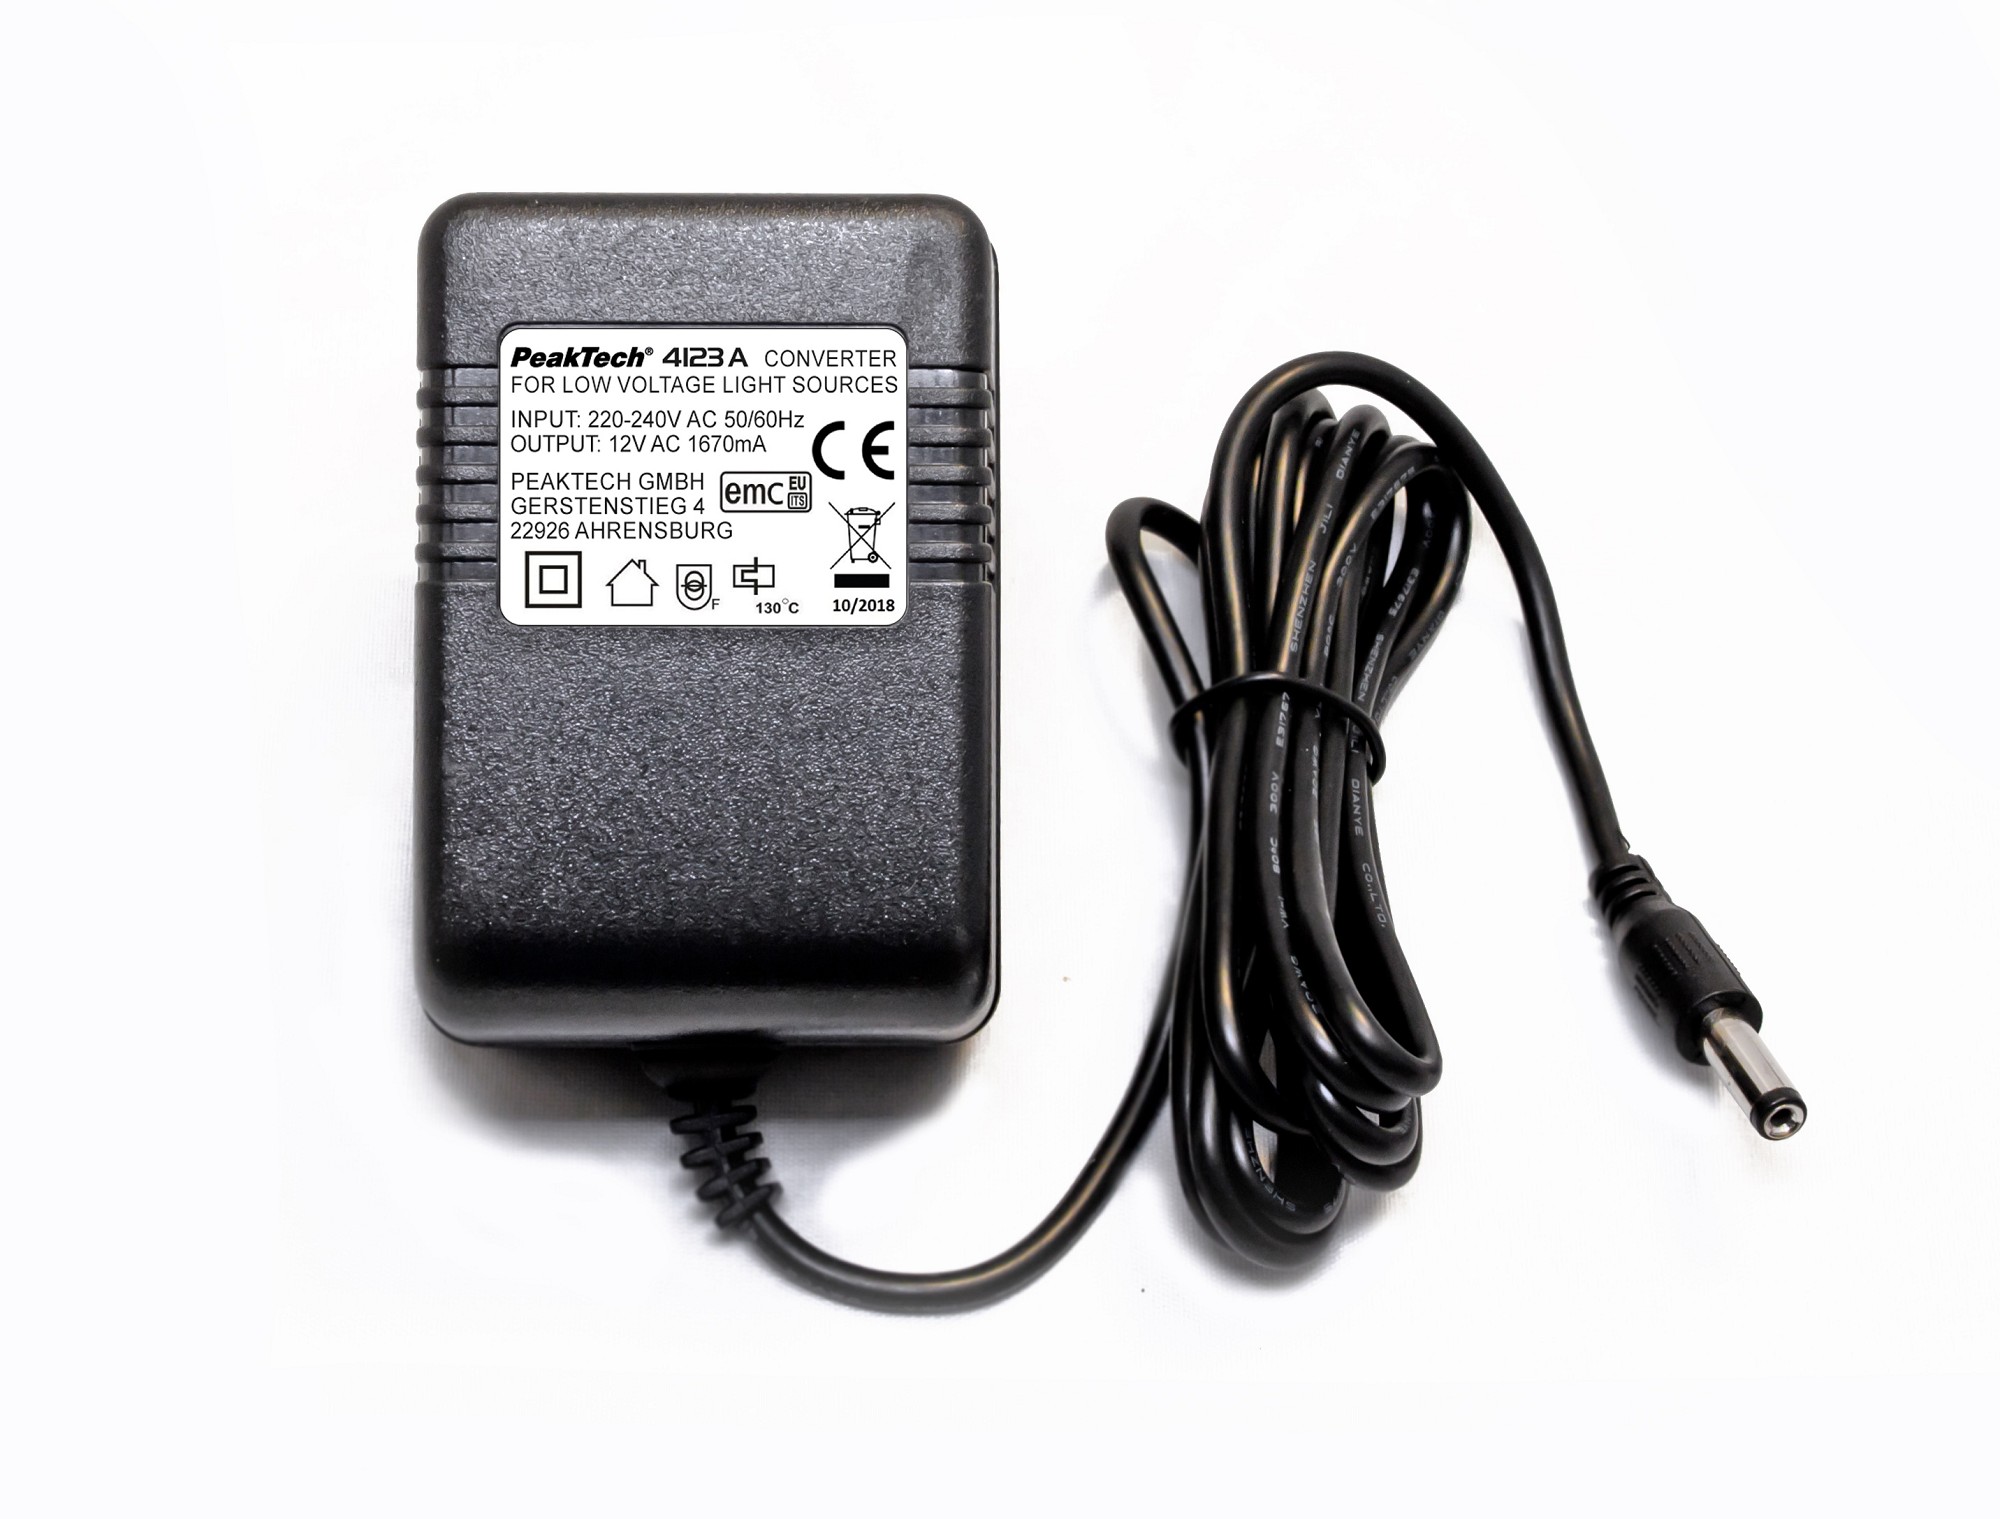 «PeakTech® P 4123 A» Converter for low voltage light sources, 12V AC/AC